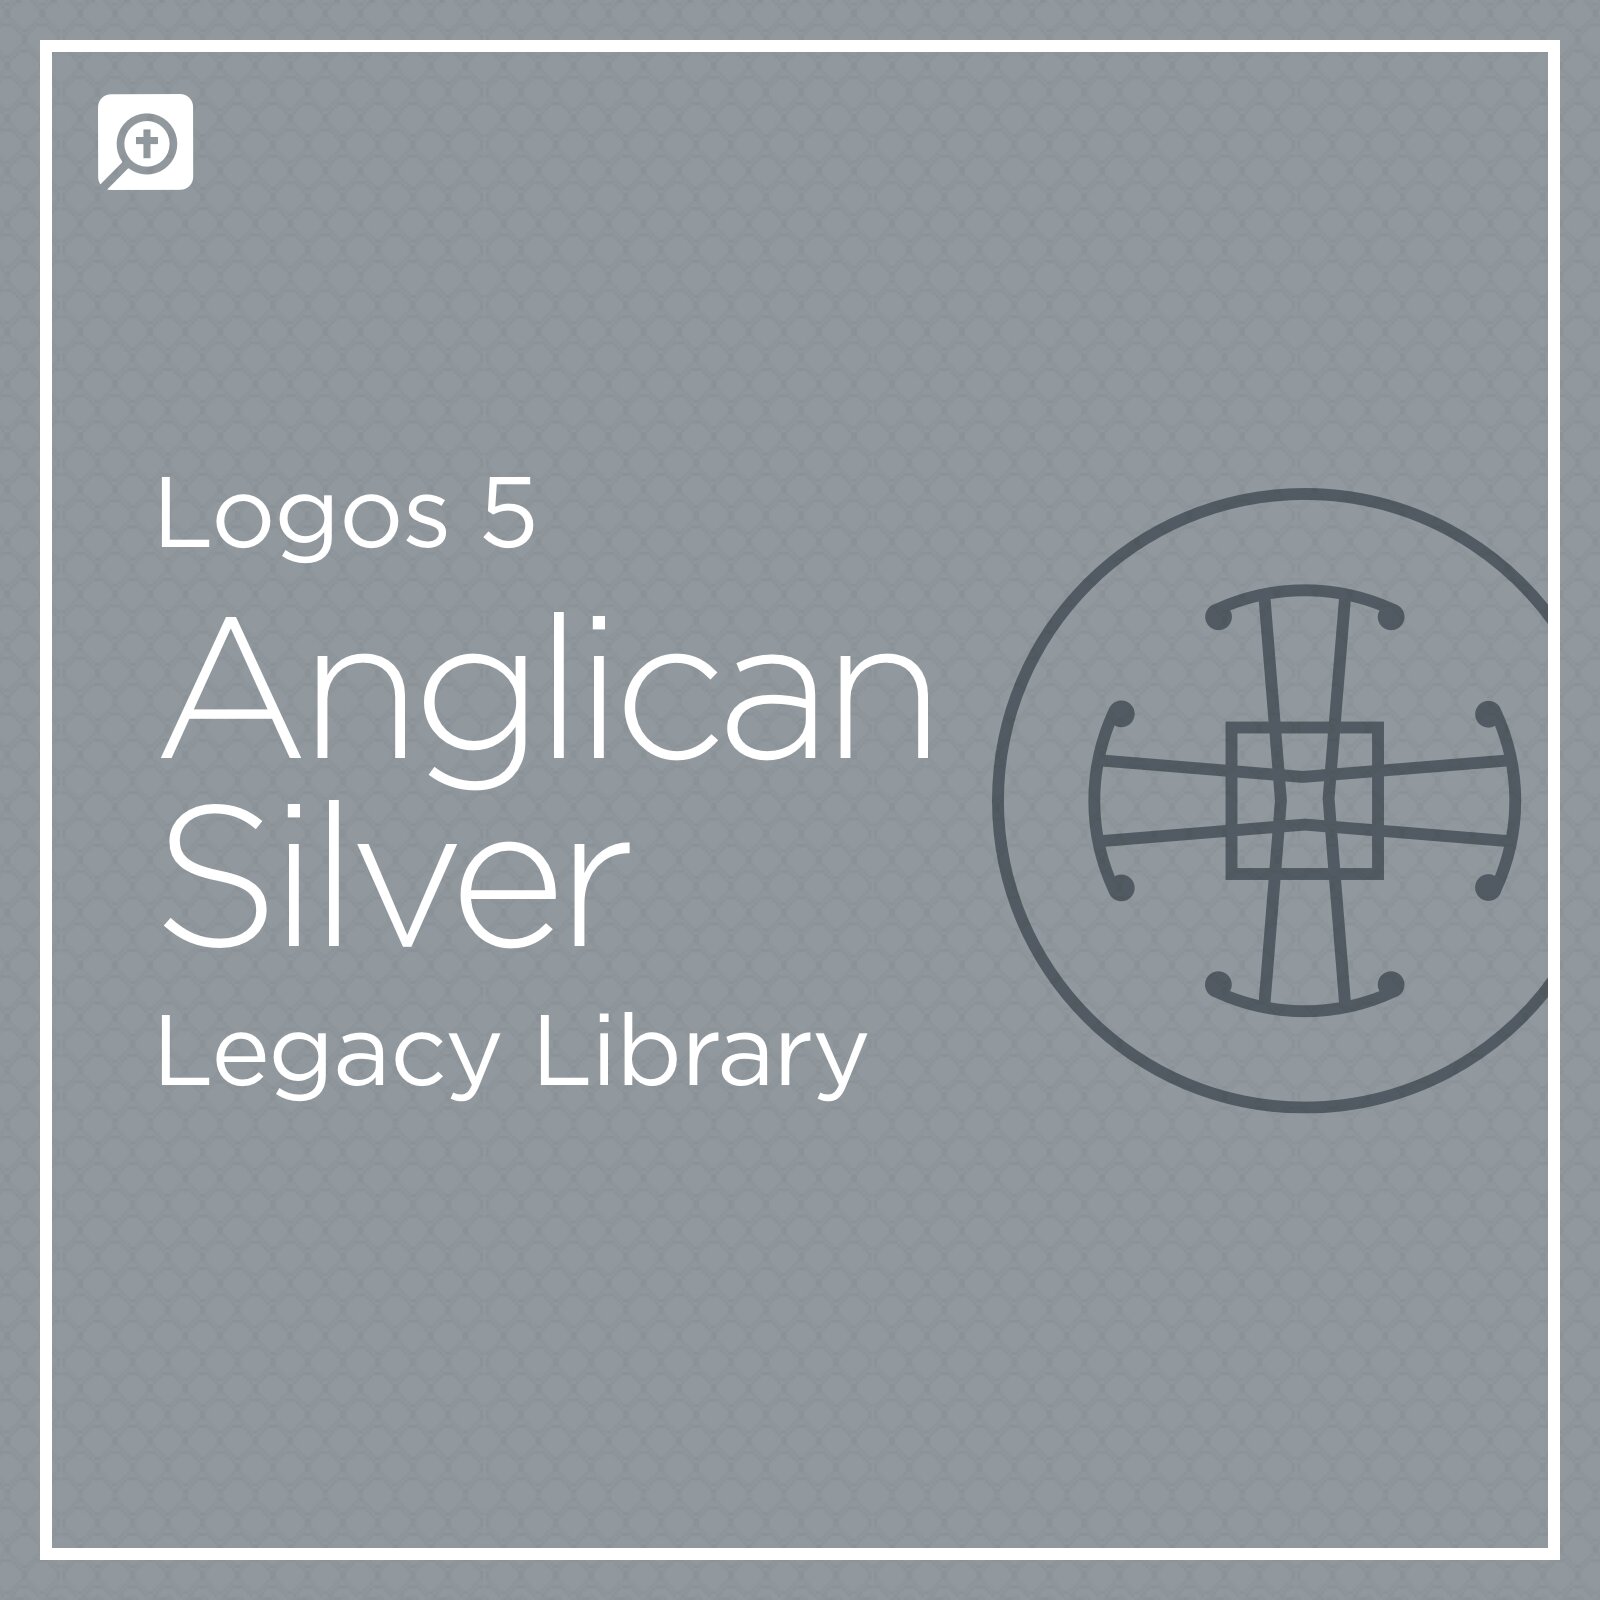 Logos 5 Anglican Silver Legacy Library